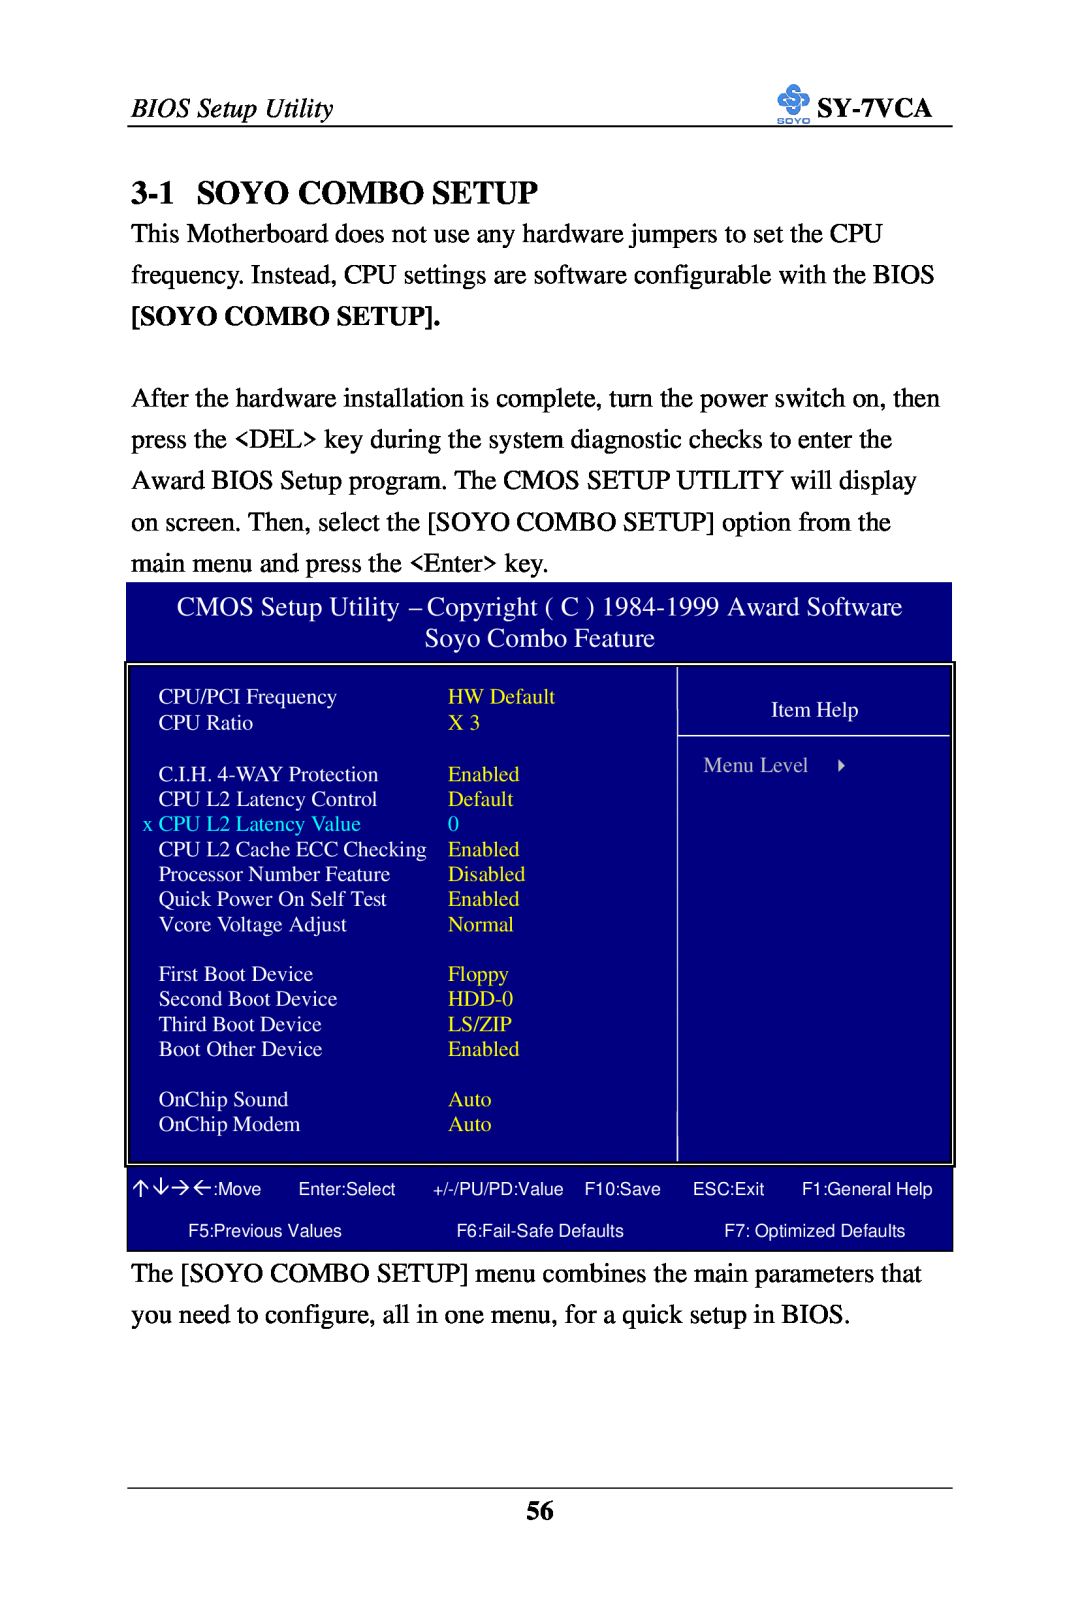 SOYO SY-7VCA user manual Soyo Combo Setup, CMOS Setup Utility - Copyright C 1984-1999 Award Software, Soyo Combo Feature 